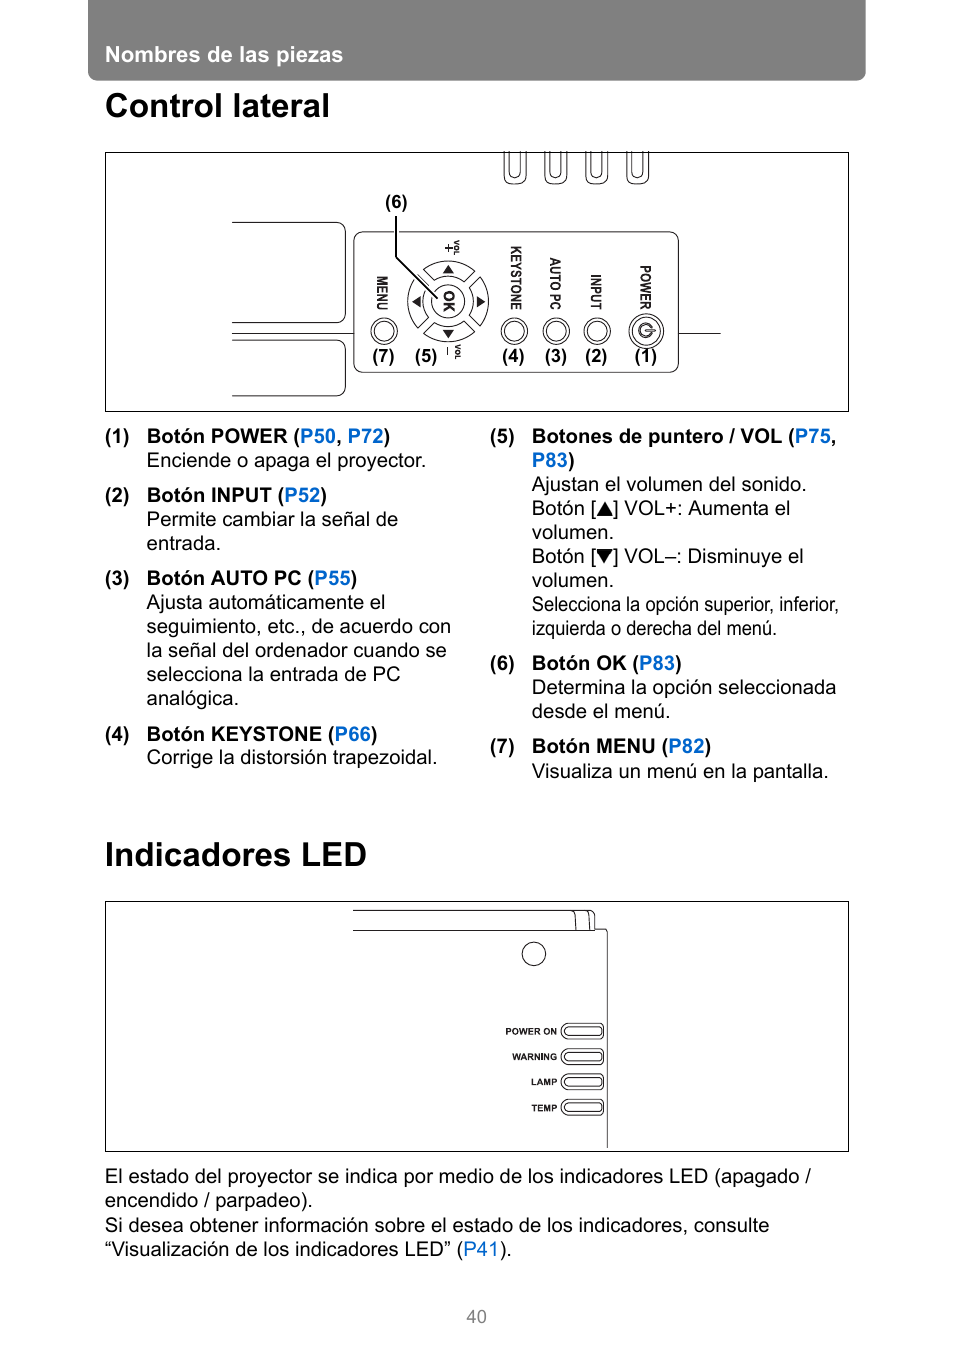 Control lateral, Indicadores led, Control lateral indicadores led | Canon XEED WUX450 Manual del usuario | Página 40 / 317